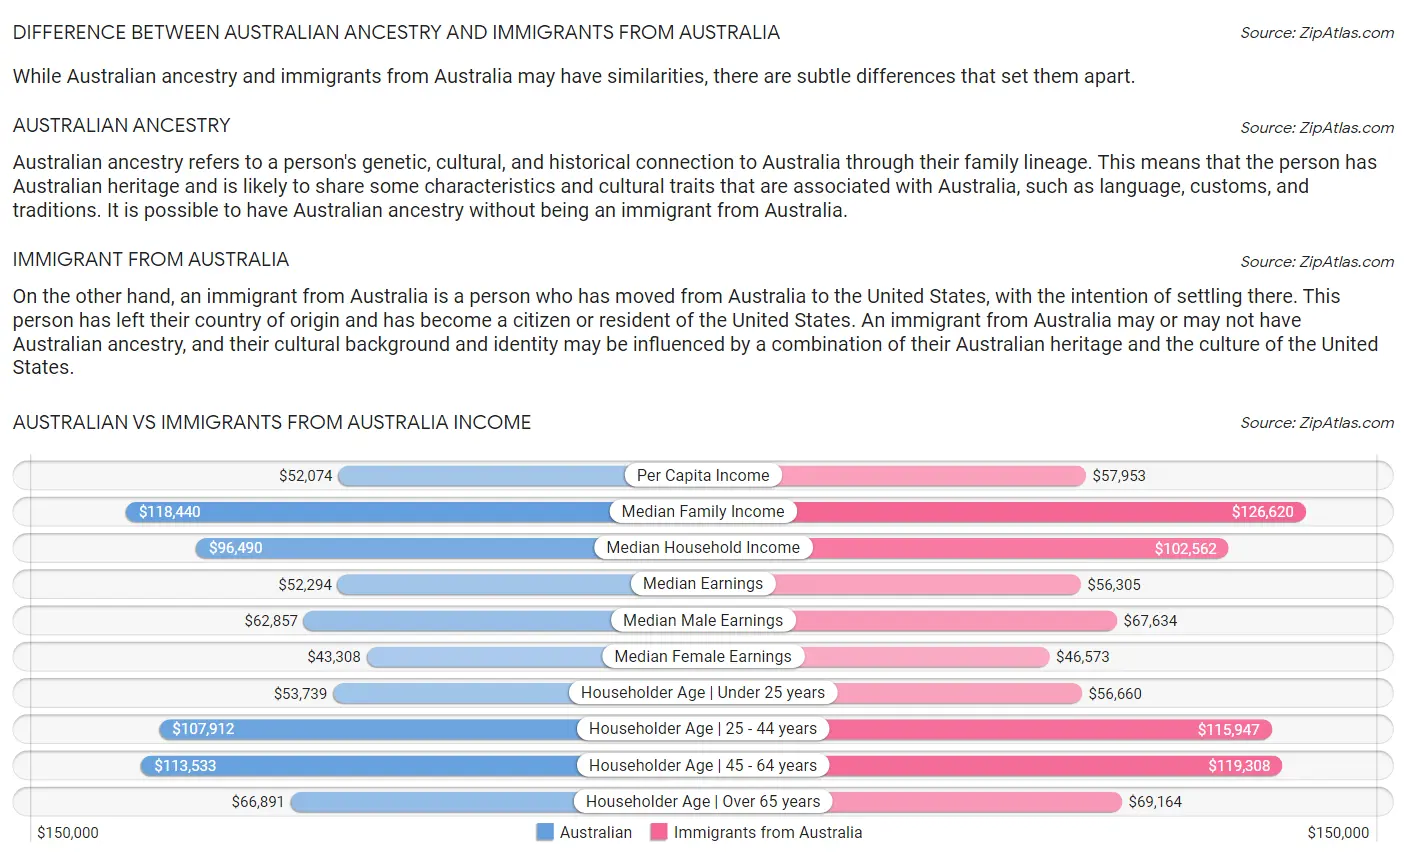 Australian vs Immigrants from Australia Income